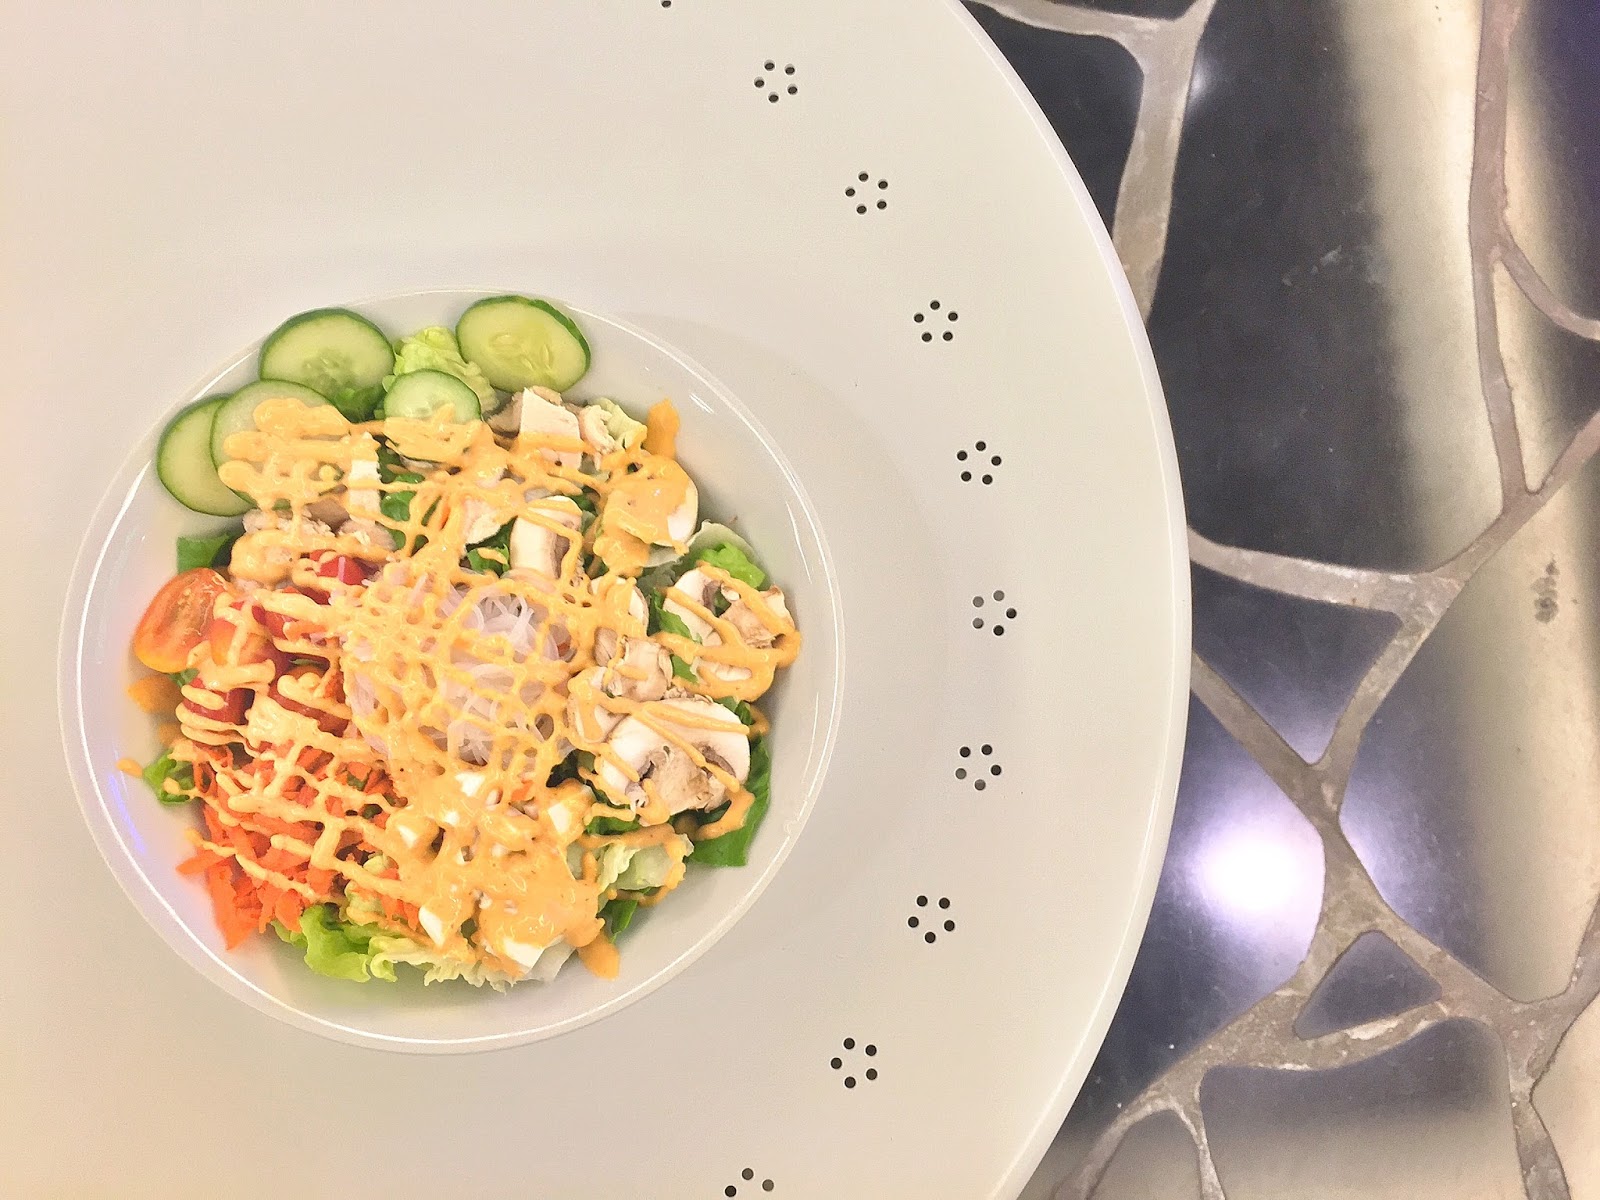 Green Rabbit Crepe & Salad Gastrobar - Tom Yummy